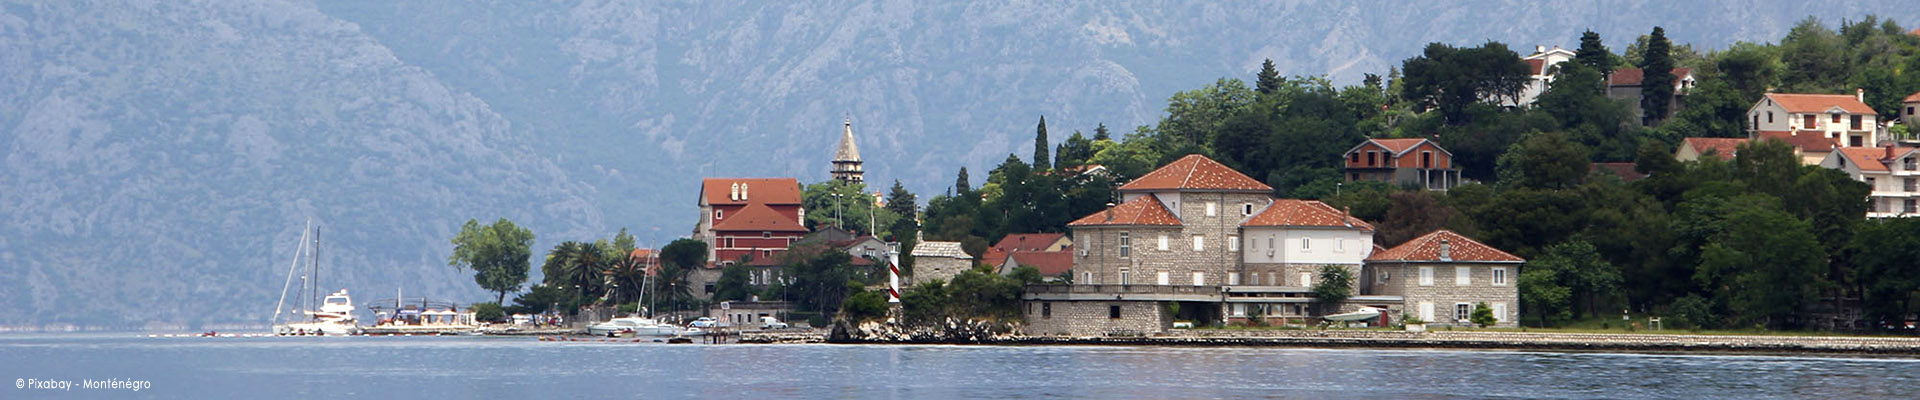 montenegro-kotor-croisiere-voilier